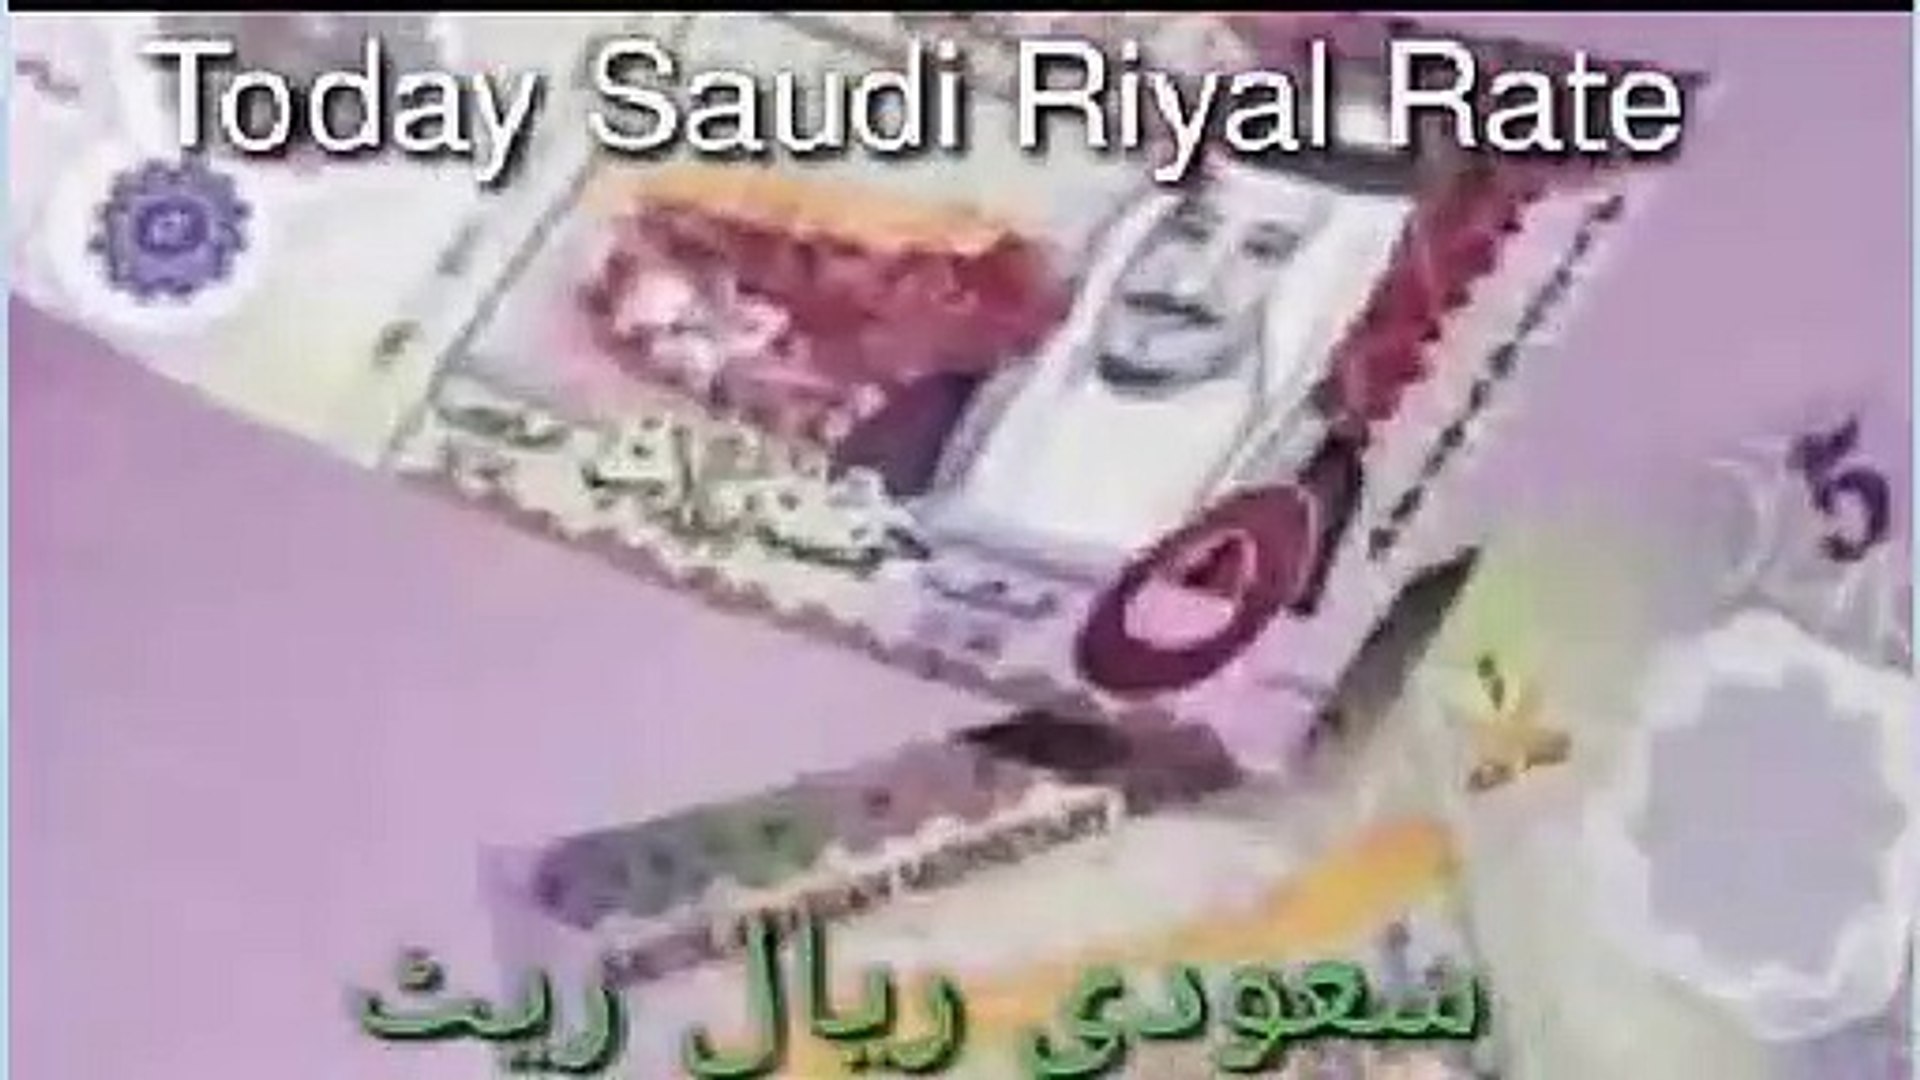 Saudi riyal rate in pakistan today